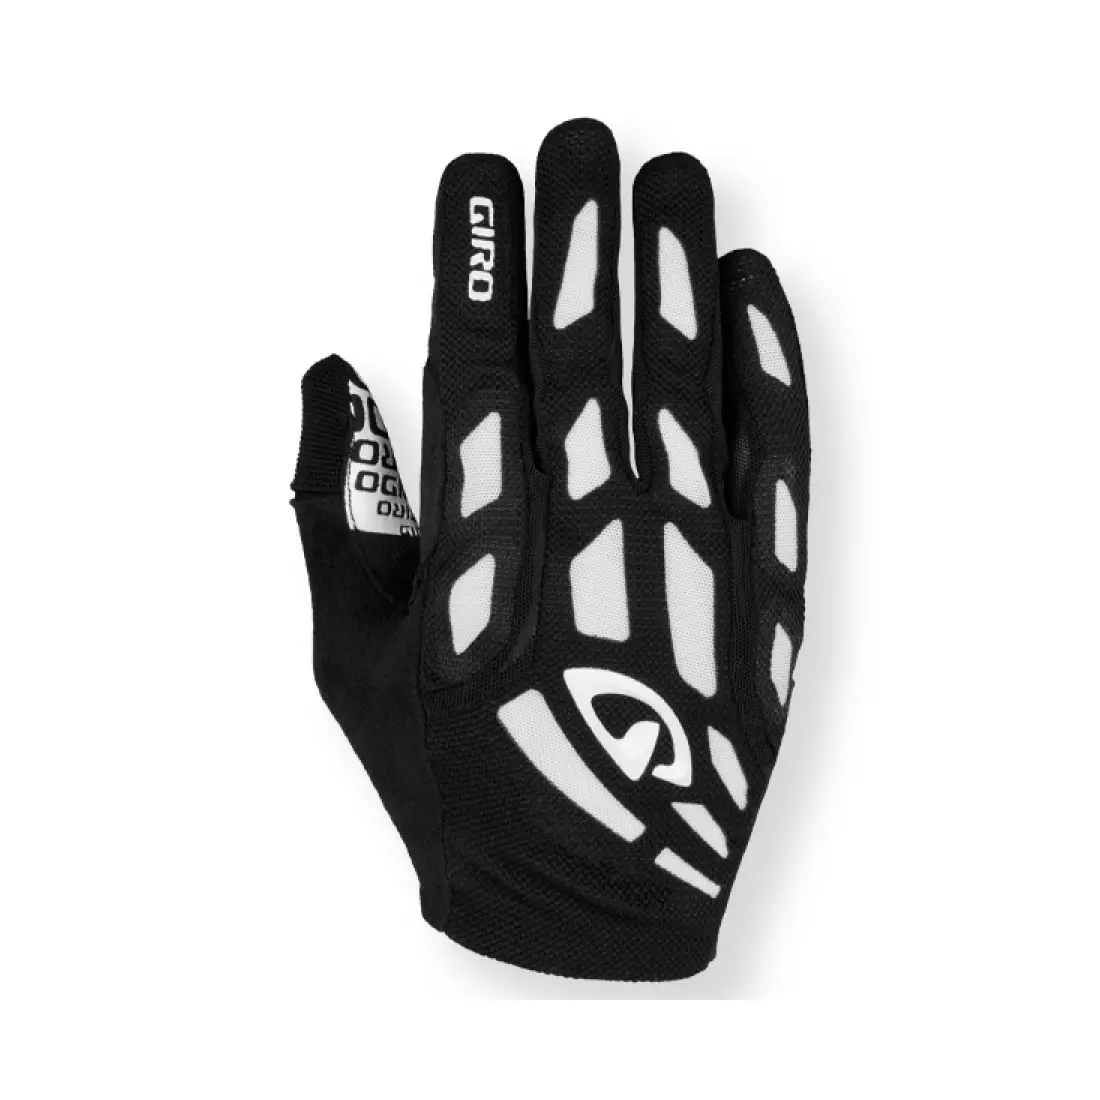 GIRO RIVET - cycling gloves, black and white